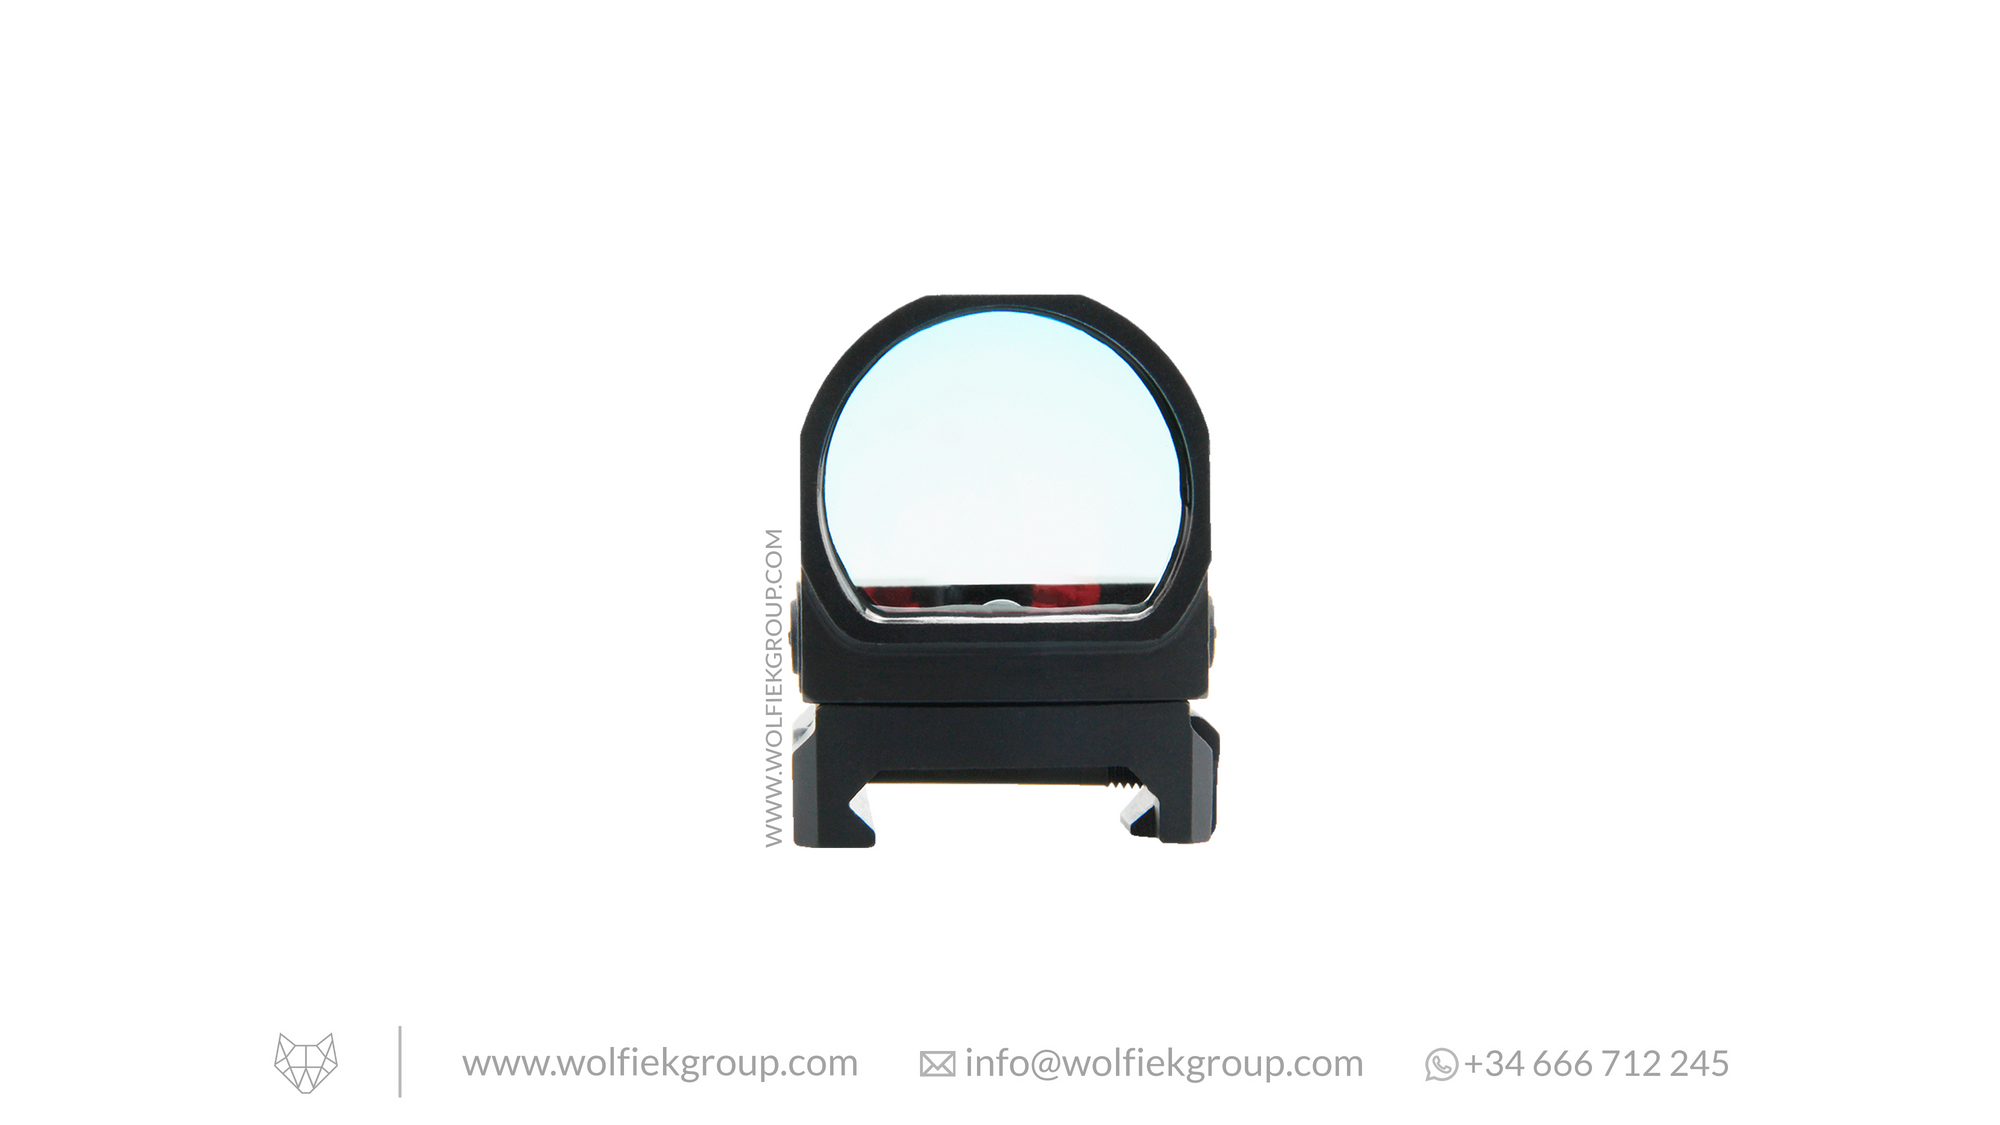 Vector Optics · Frenzy-X 1X22X26 AUT Red Dot Auto Light Sensor - SCRD-37